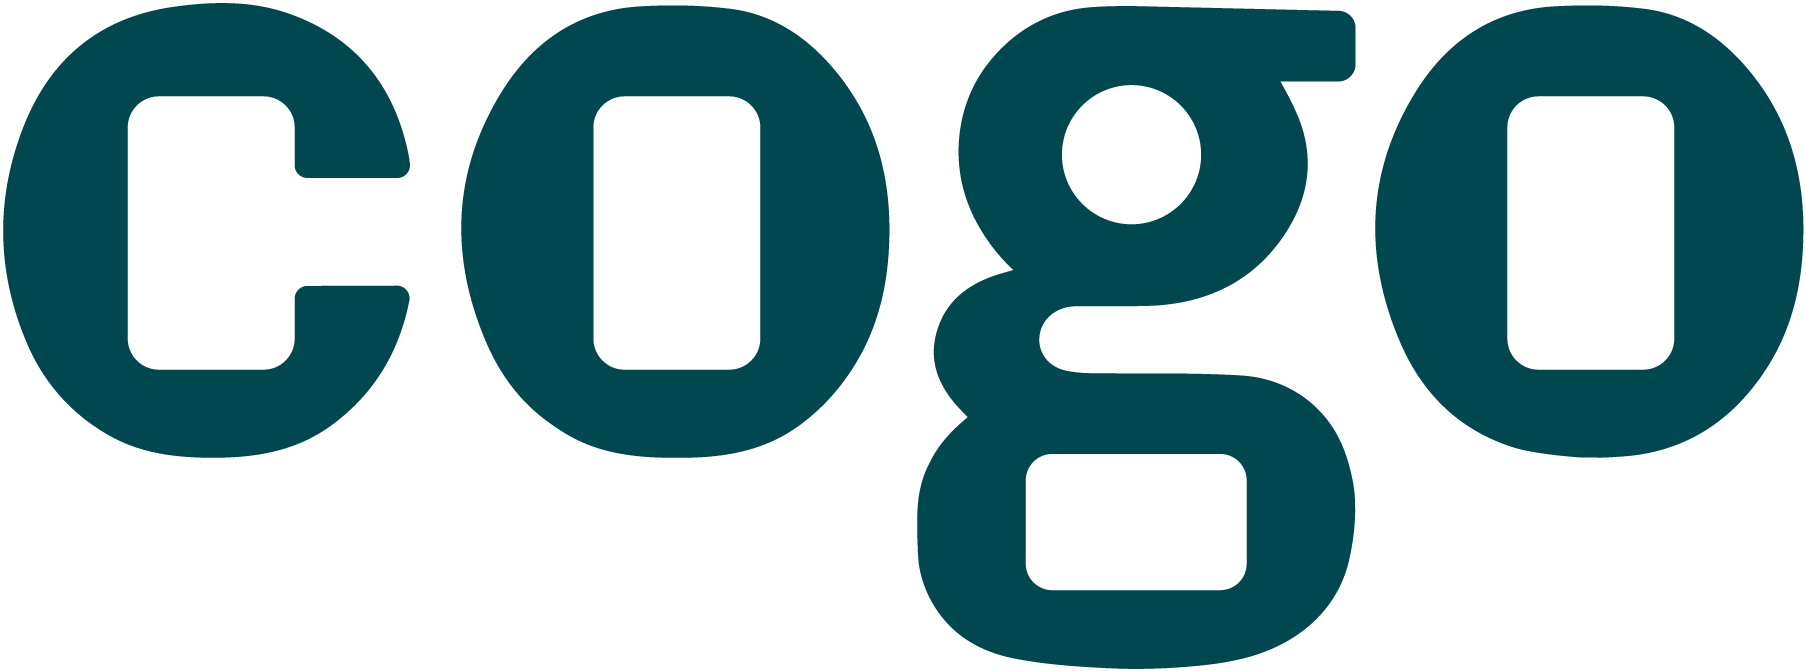 Cogo primary logo.png